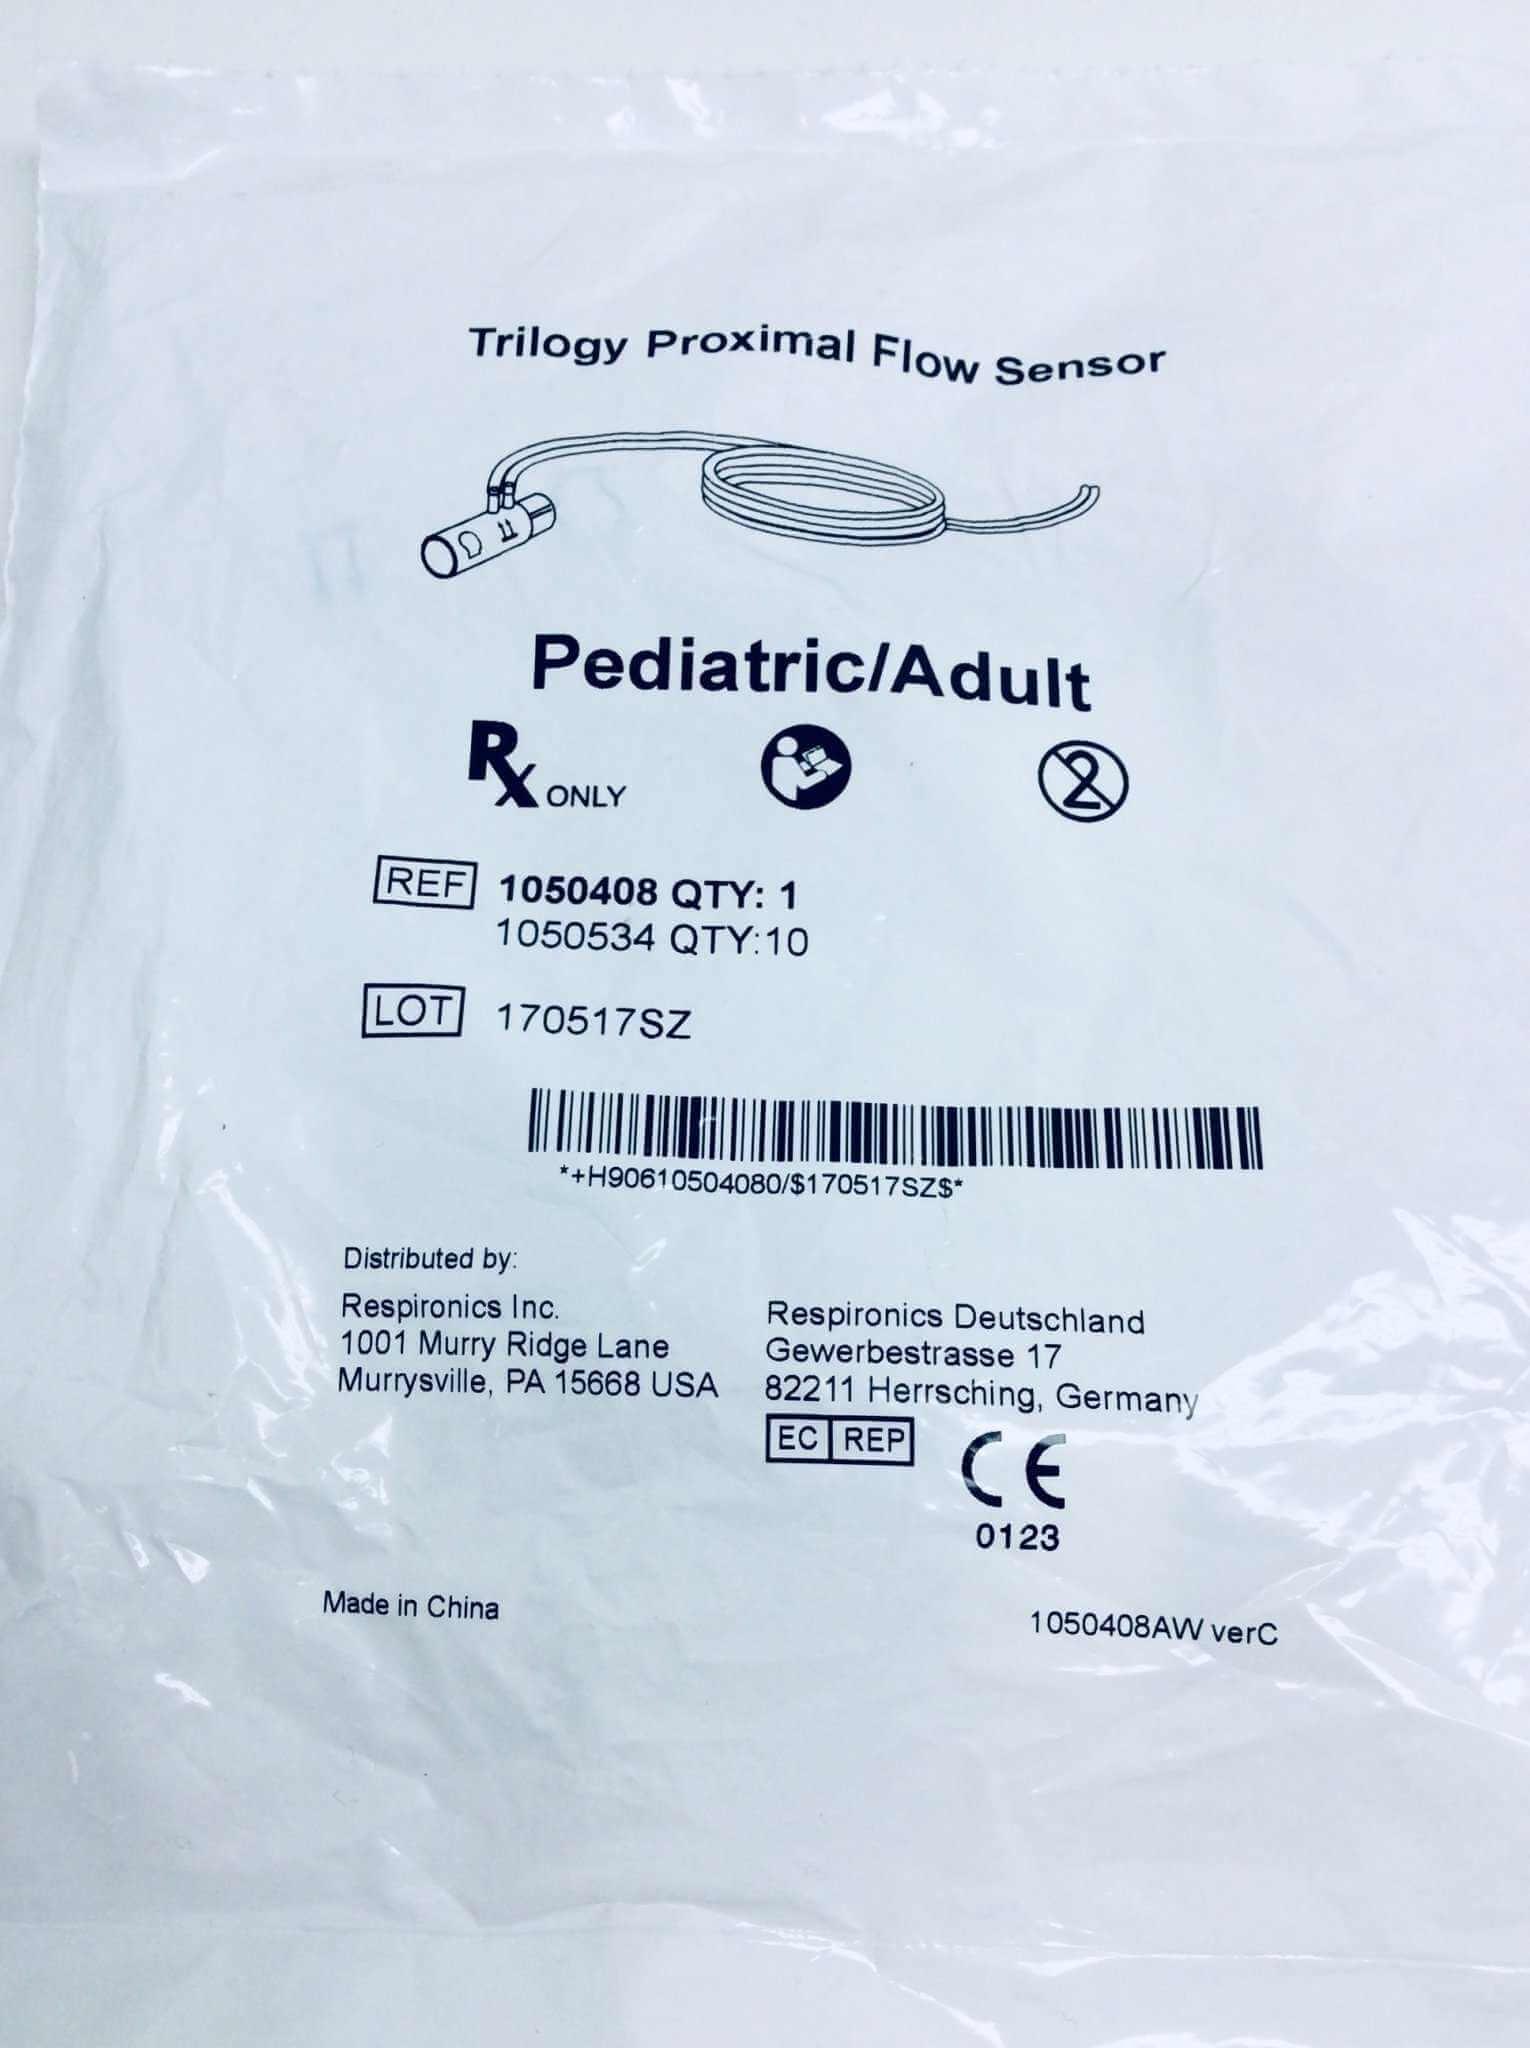 NEW Philips Respironics Trilogy Proximal Flow Sensor Pediatric Adult 1050408AW - MBR Medicals